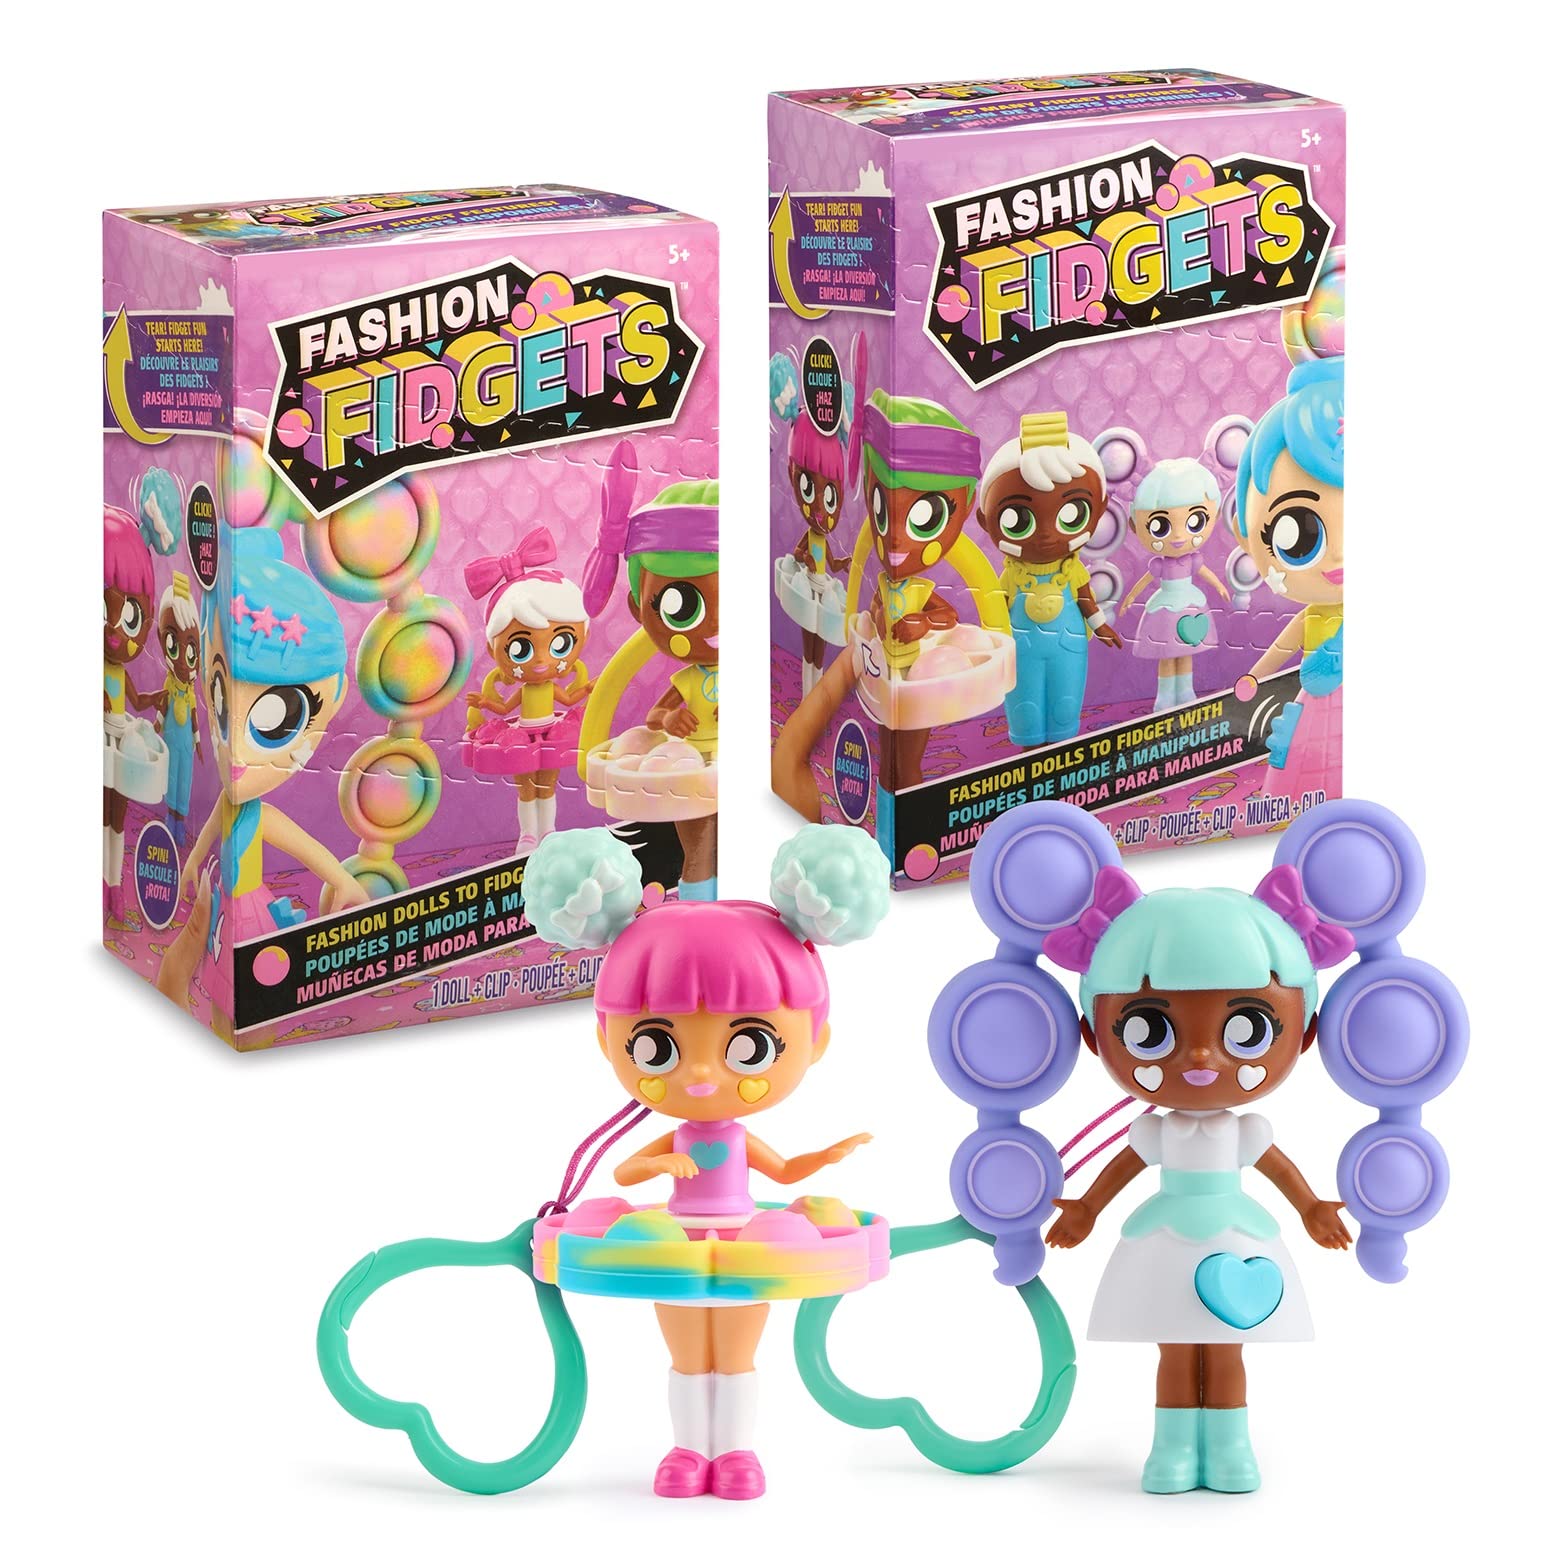 2-Pack WowWee Fashion Fidgets Sensory Push Pop Fidget Toys (Dolls) $8 + Free Shipping w/ Prime or on $25+